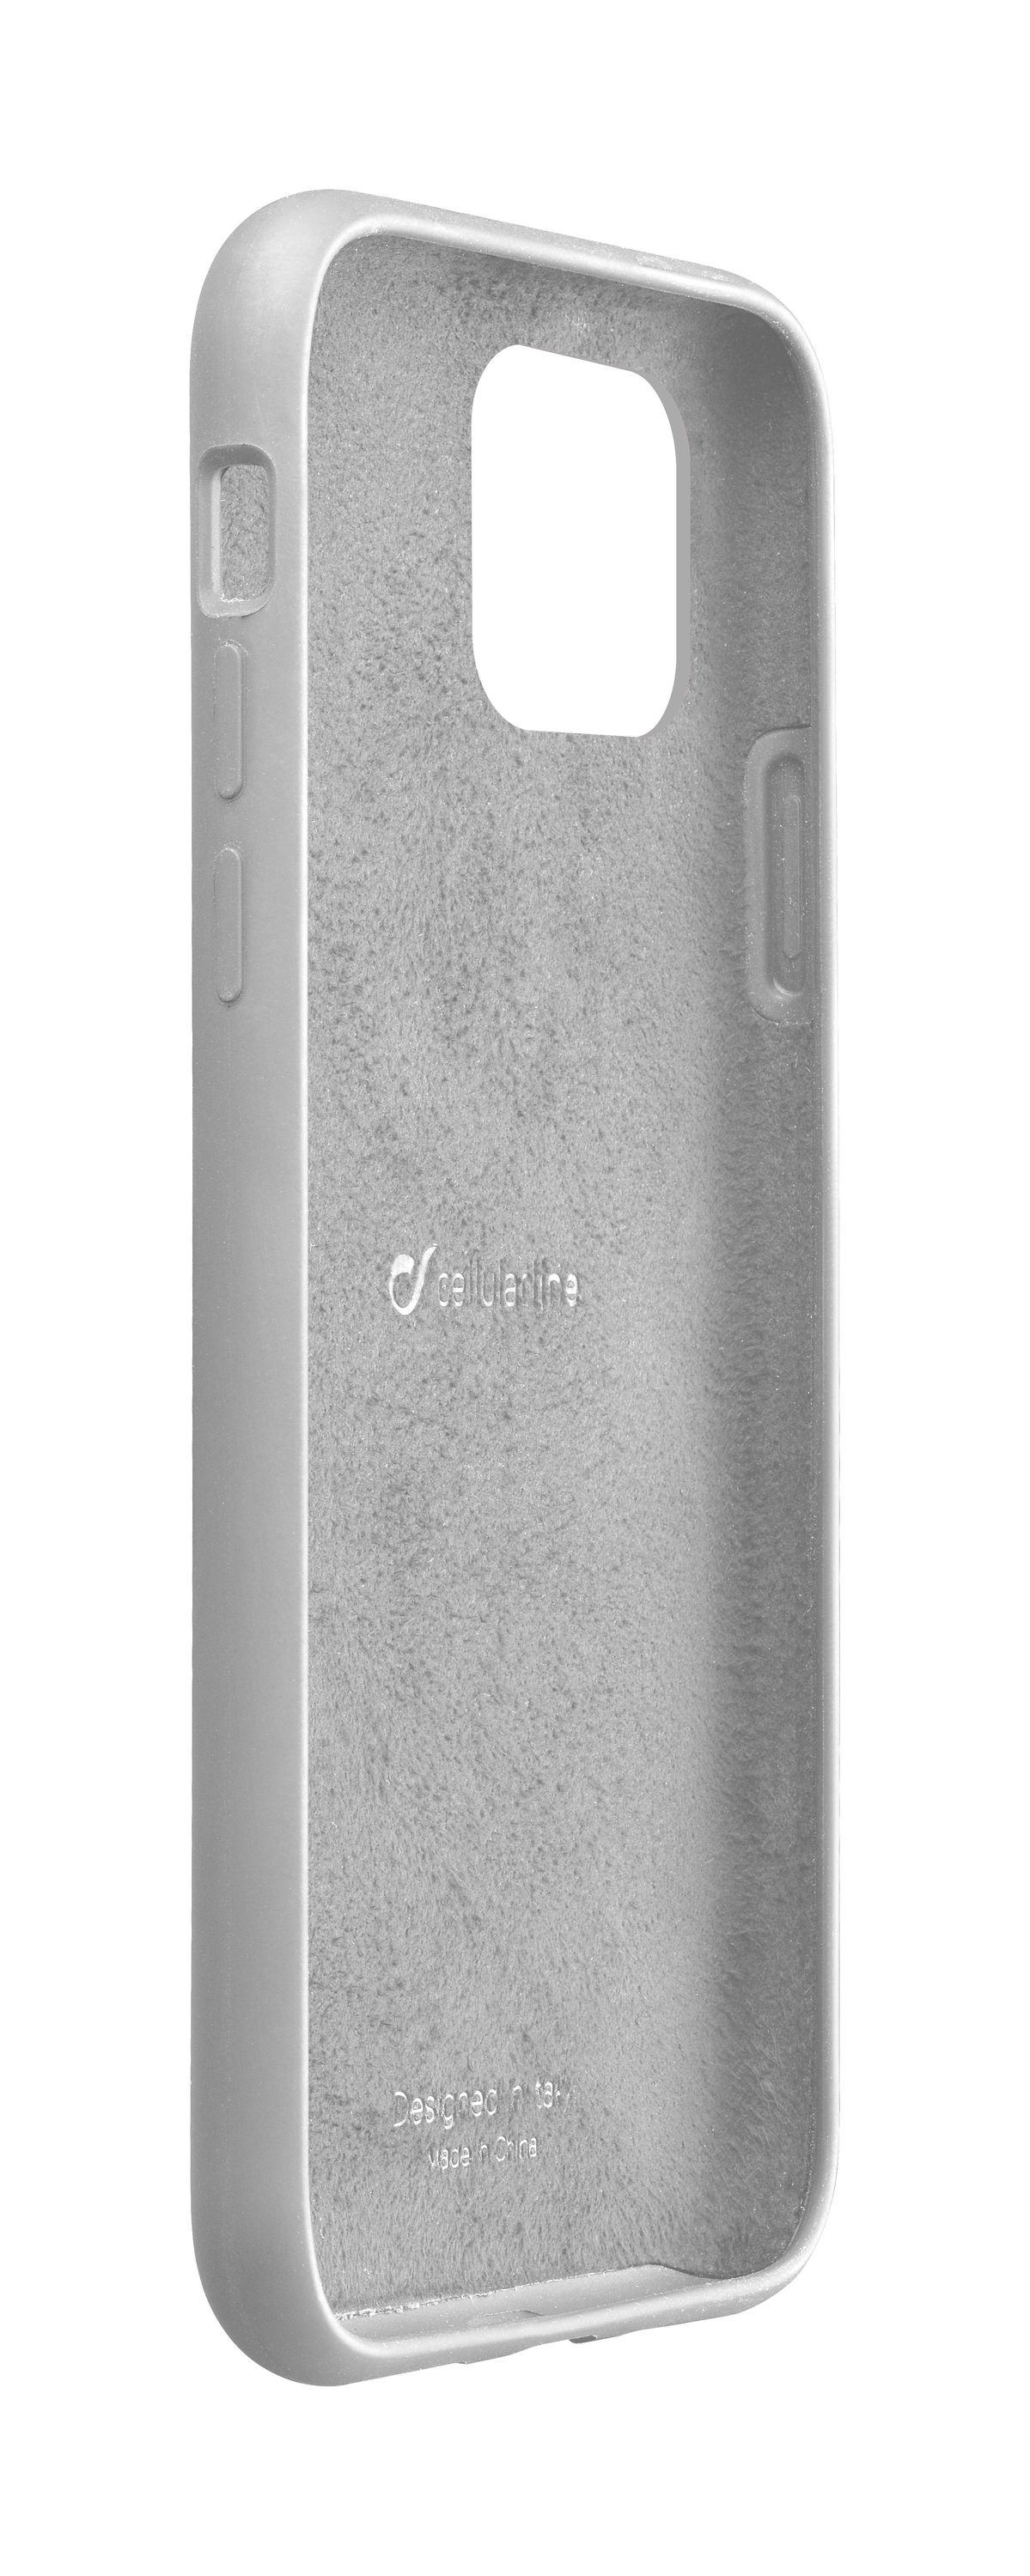 iPhone 11 Pro, case sensation, grey